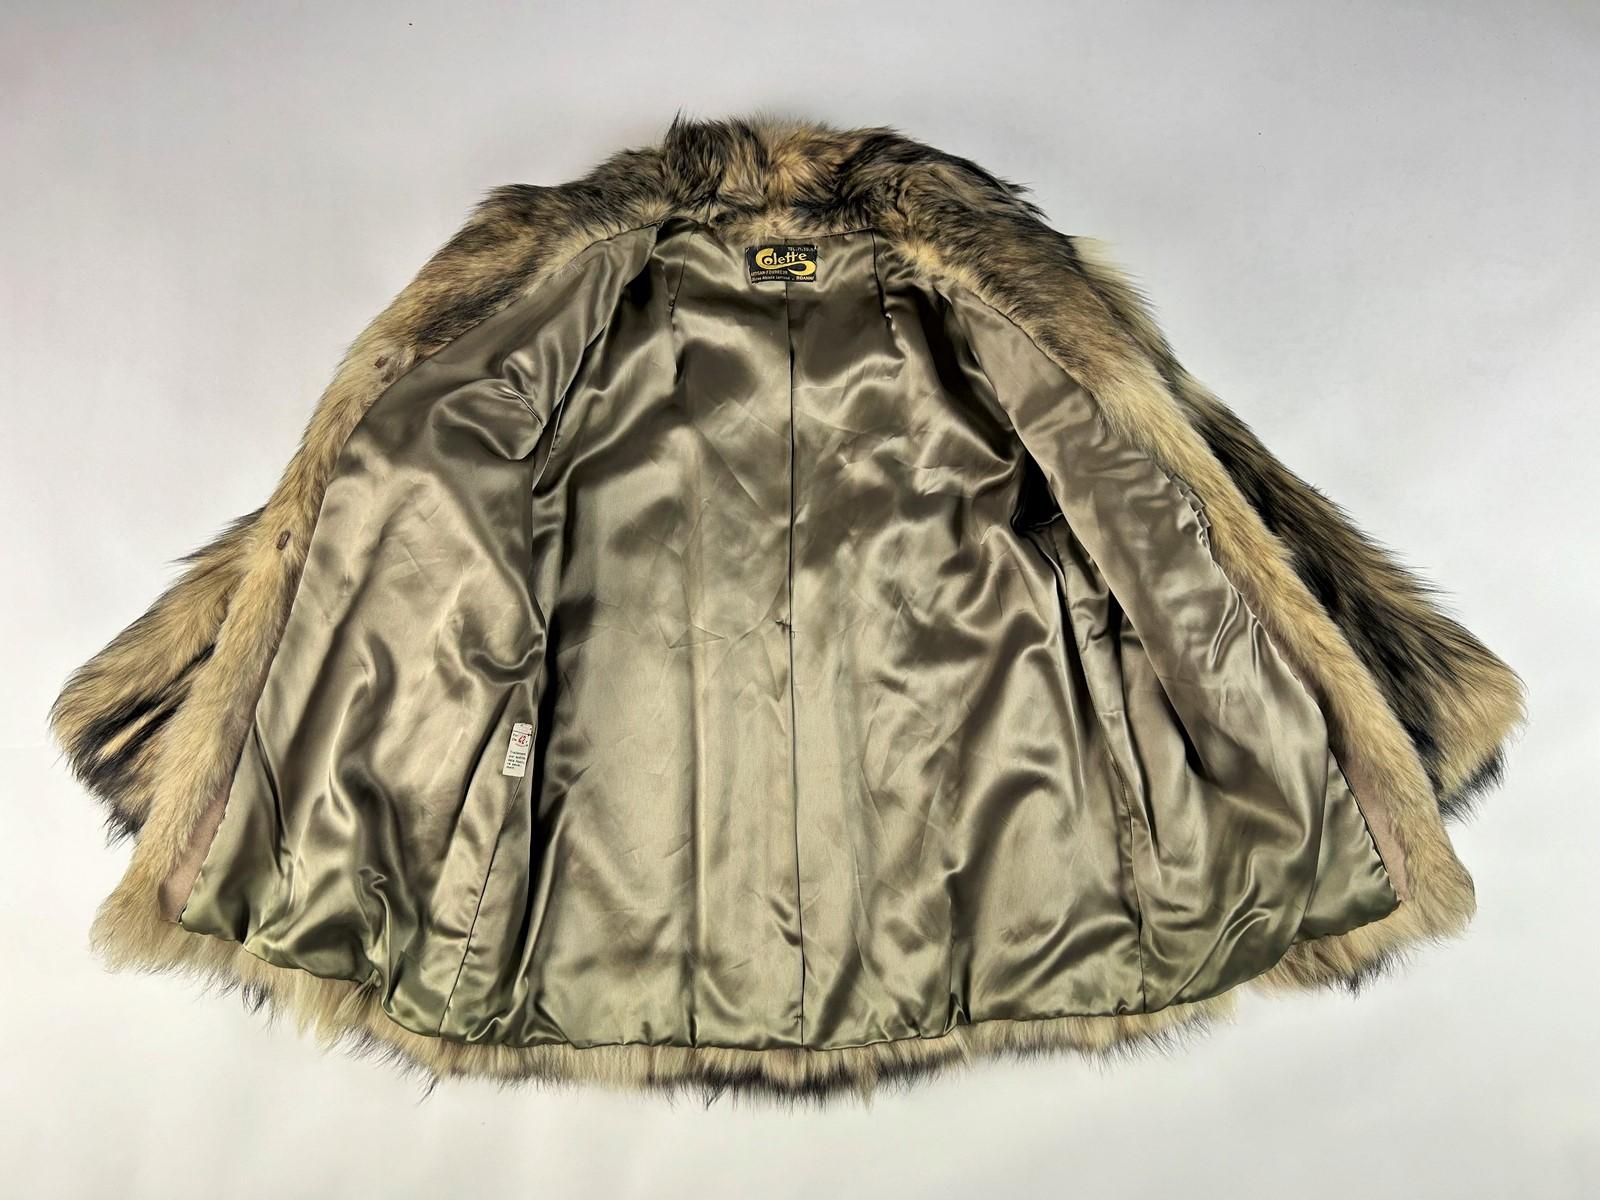 Marmot Fur Coat by Maison Colette - French Circa 1980 For Sale 6